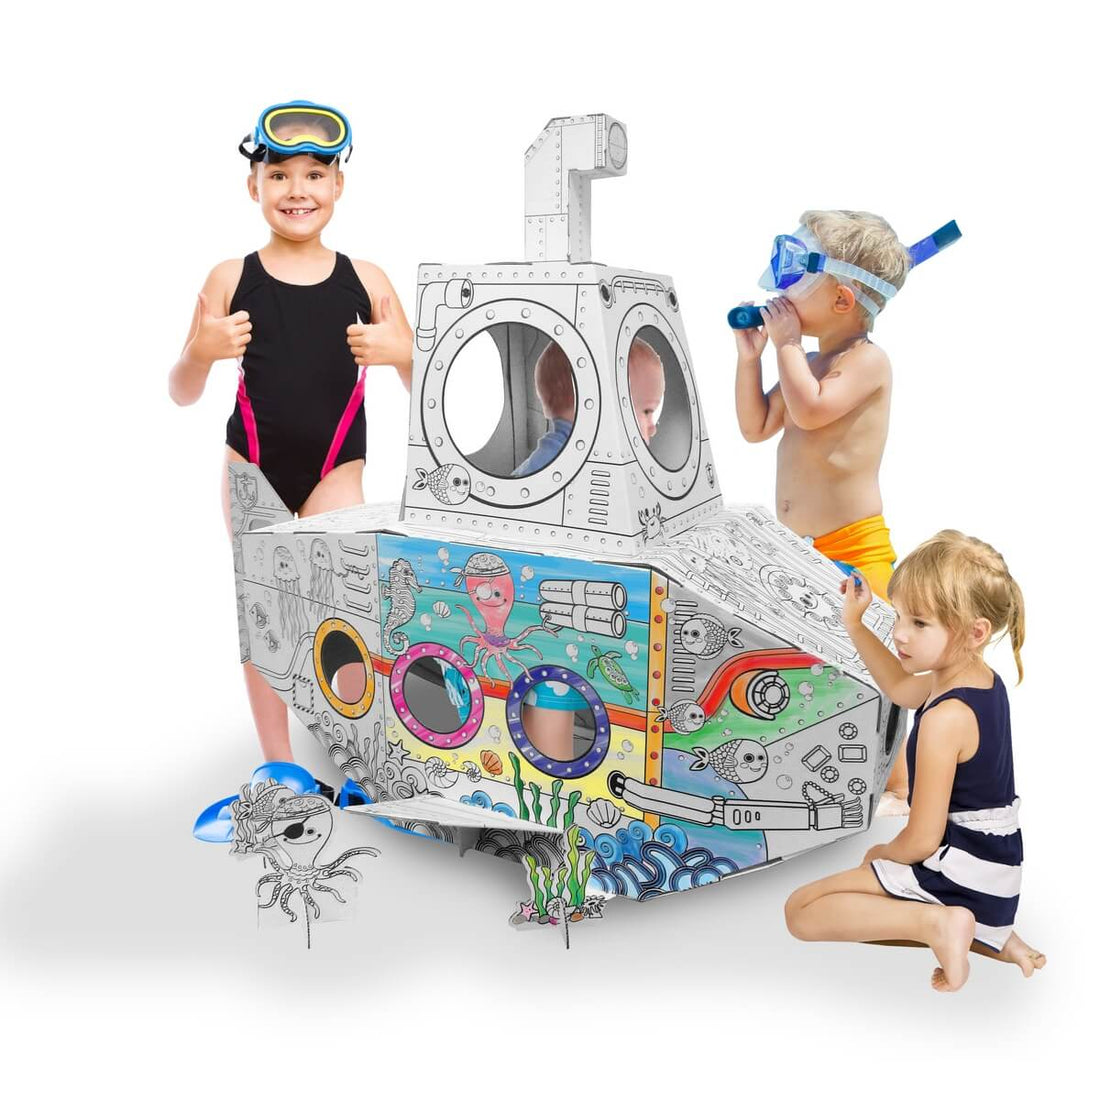 Cardboard Submarine Playhouse insights